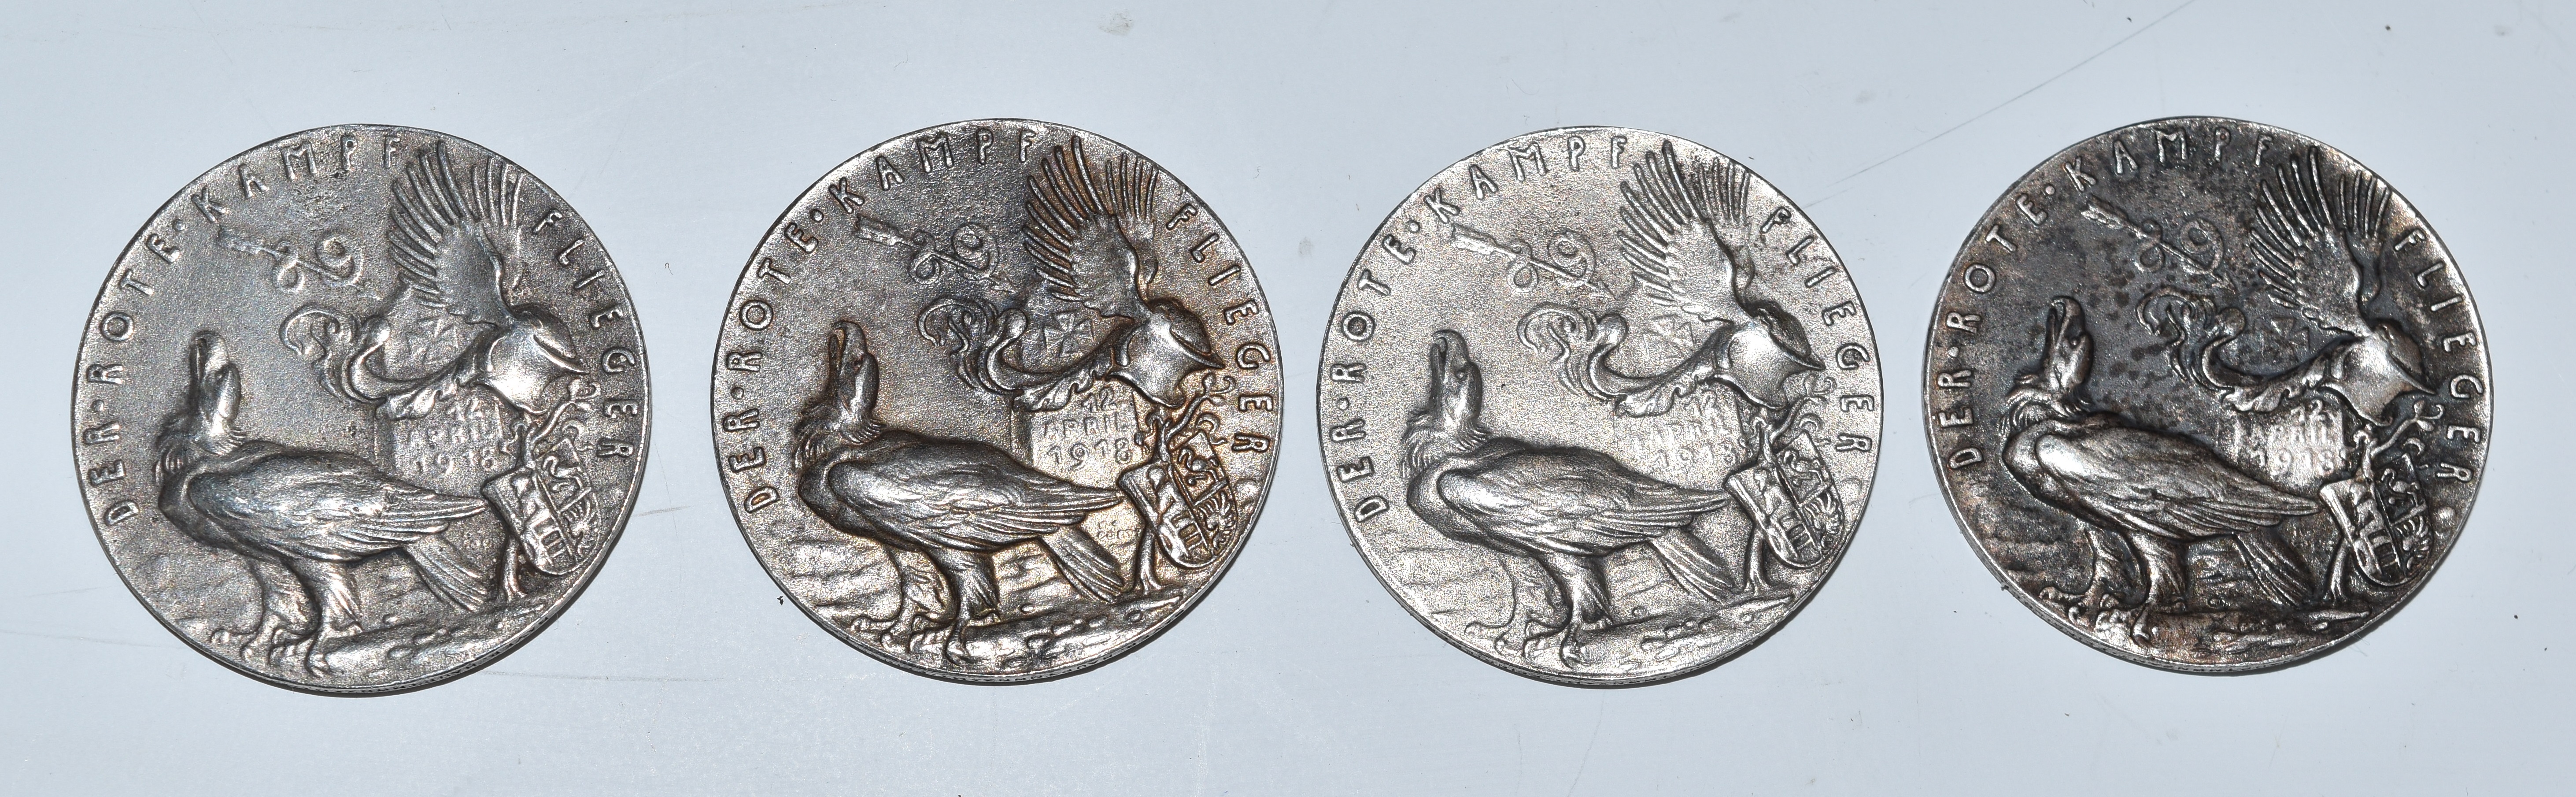 Four German white metal medallions impressed 'Der Rote Kampf Flieger' and Rittmeister Manfred Frhr V - Image 2 of 2